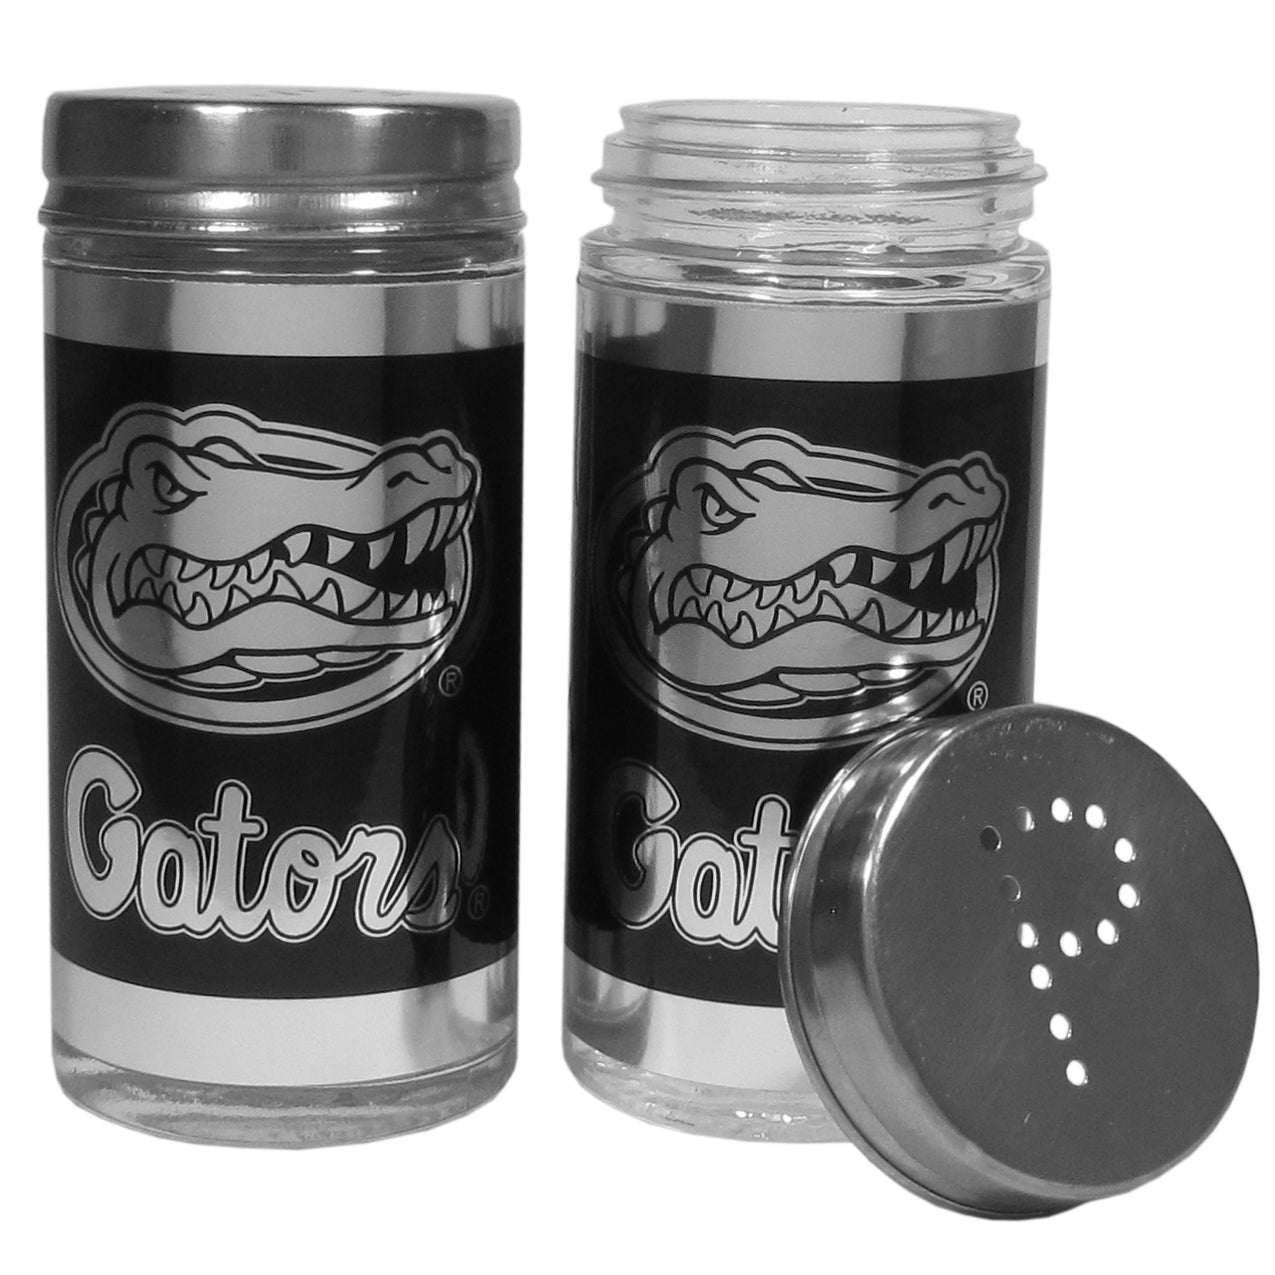 Florida Gators Black Salt & Pepper Shaker